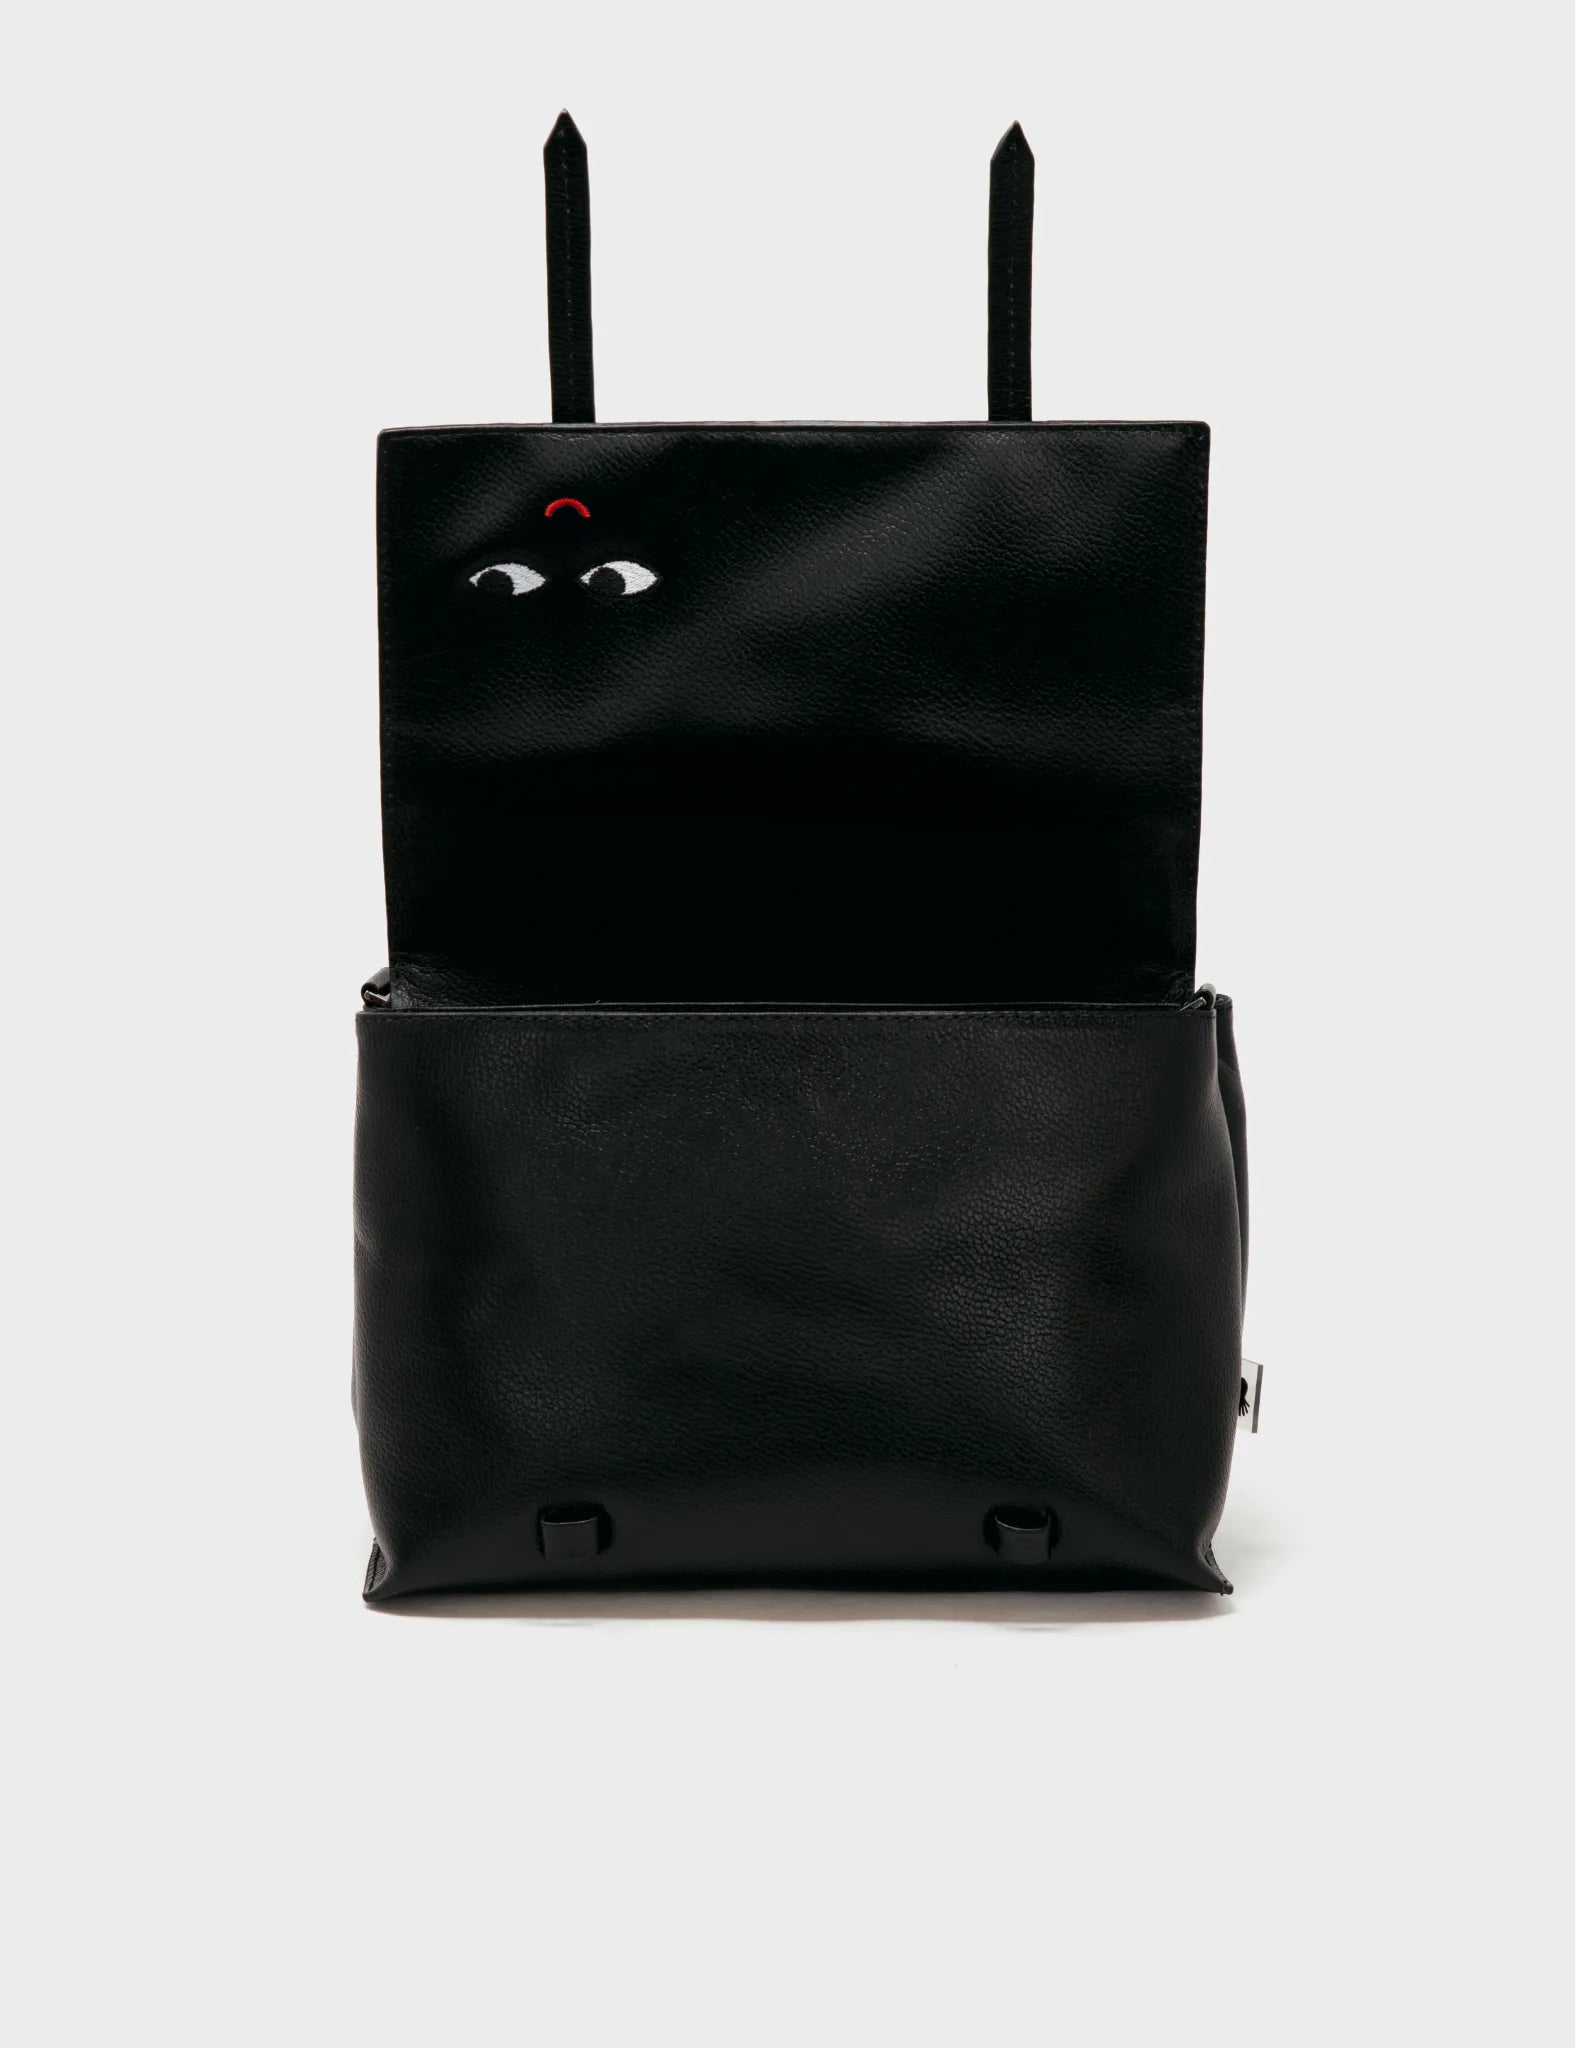 Reversible Small Messenger Bag Black Leather - Utopian Landscape - Side B Open 